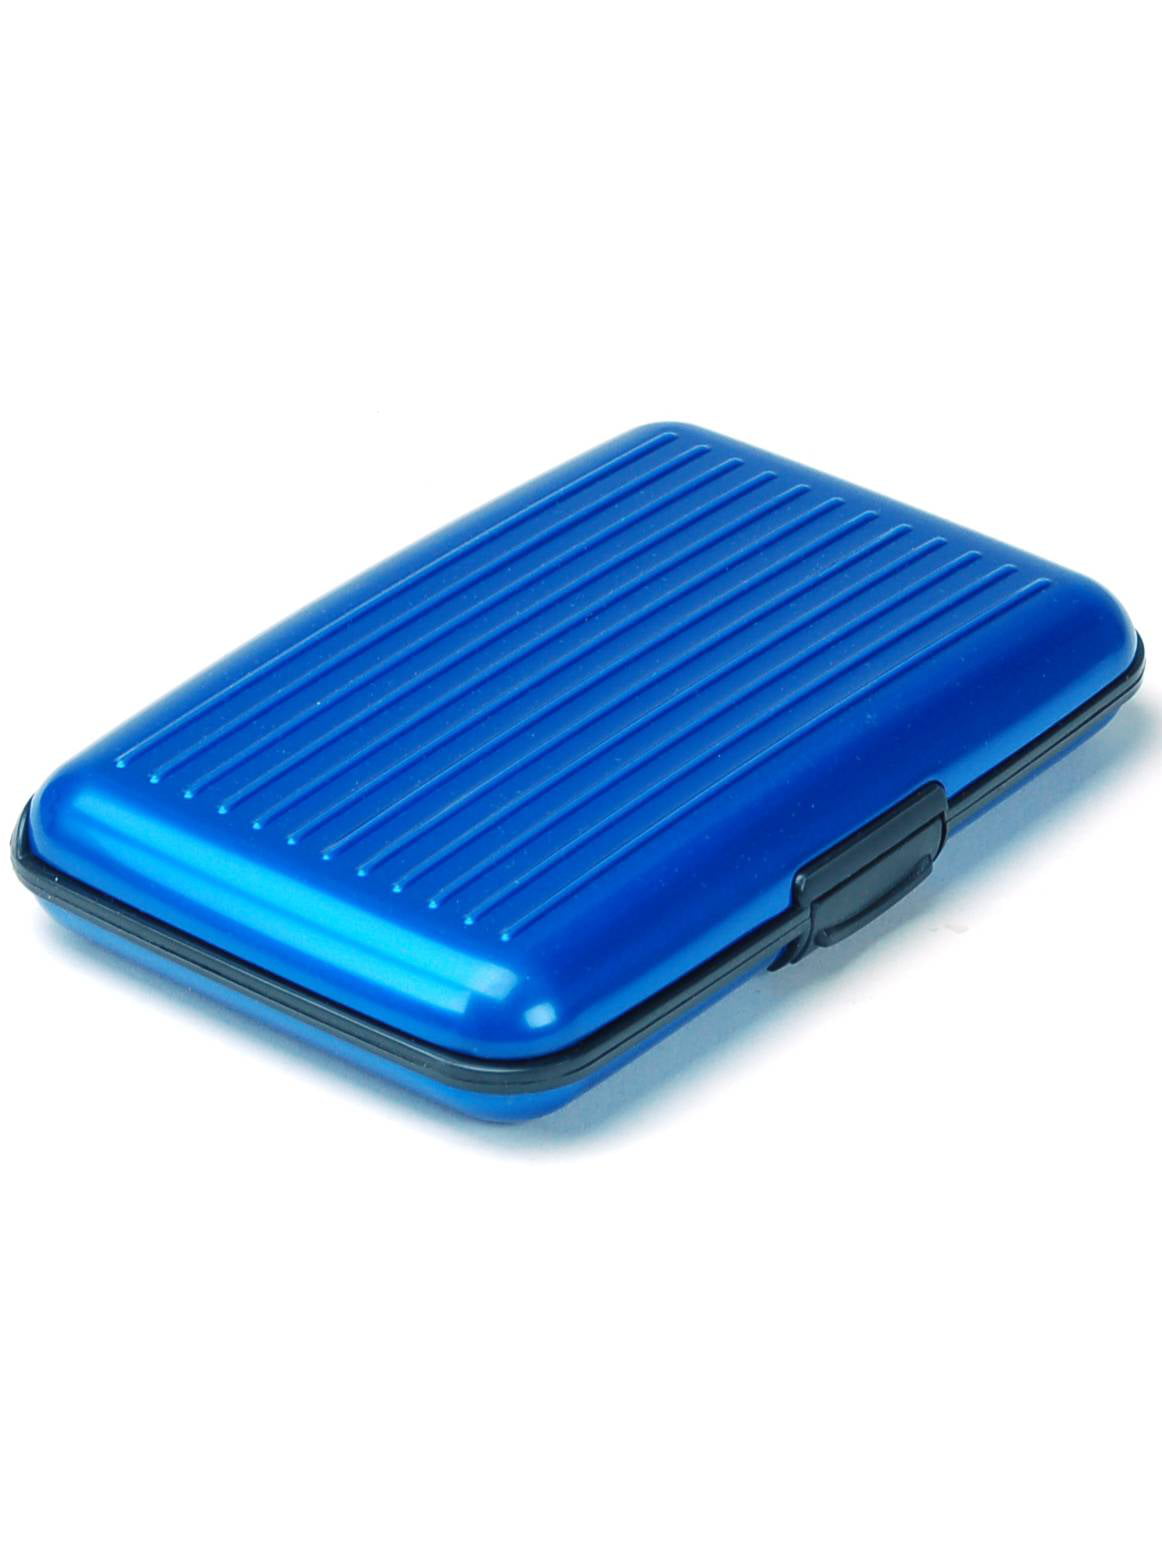 Aluminum Wallet/Credit Card Holder Standard RFID Protection Blue 